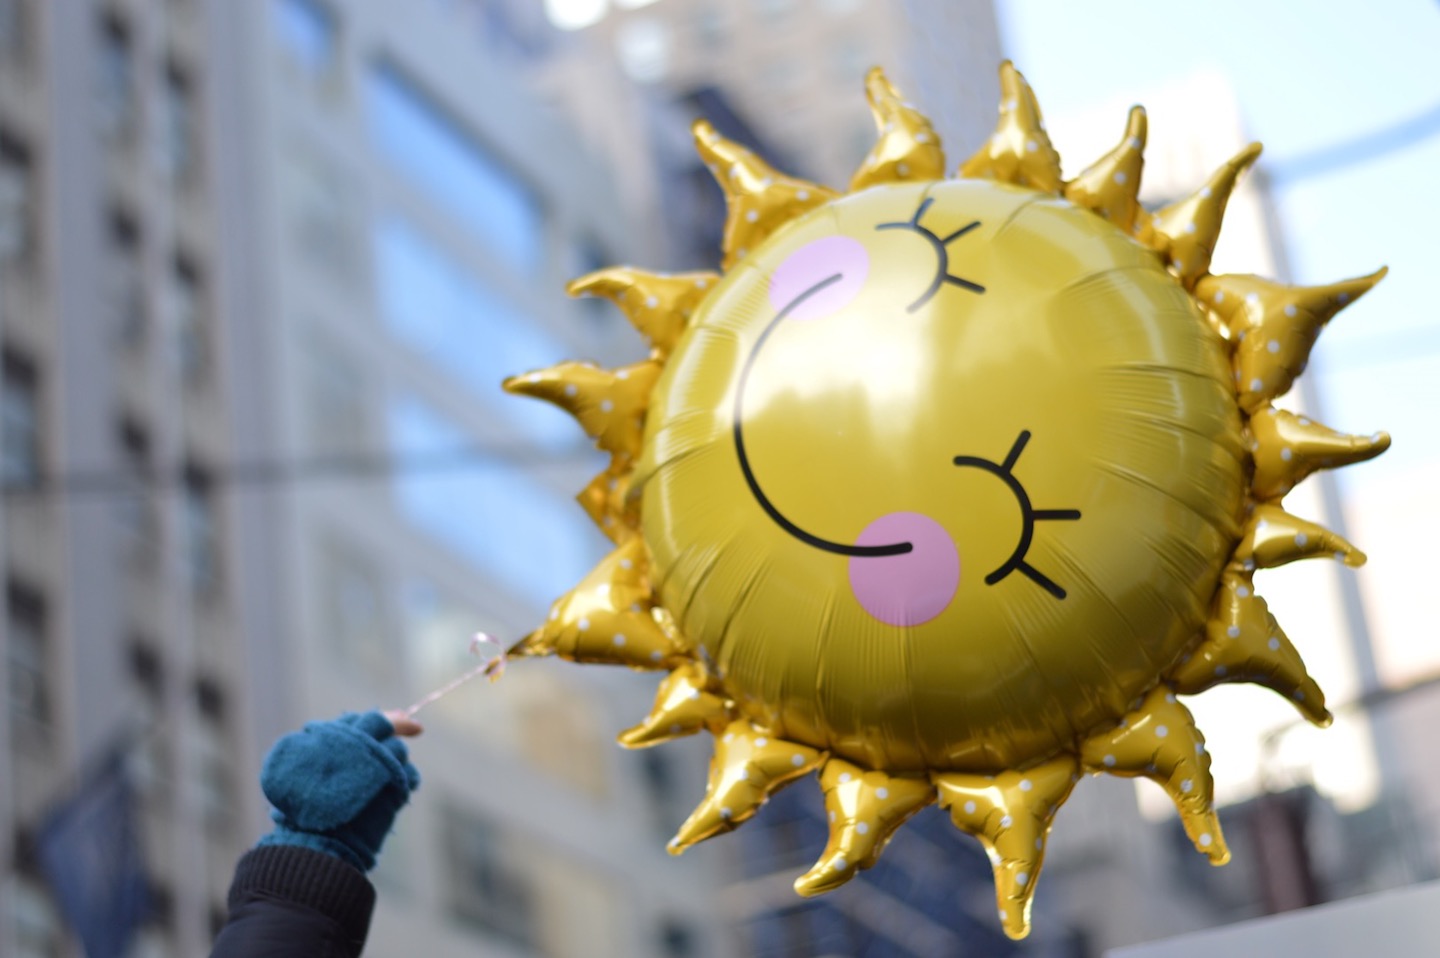 A hand holds a sun-shaped balloon.